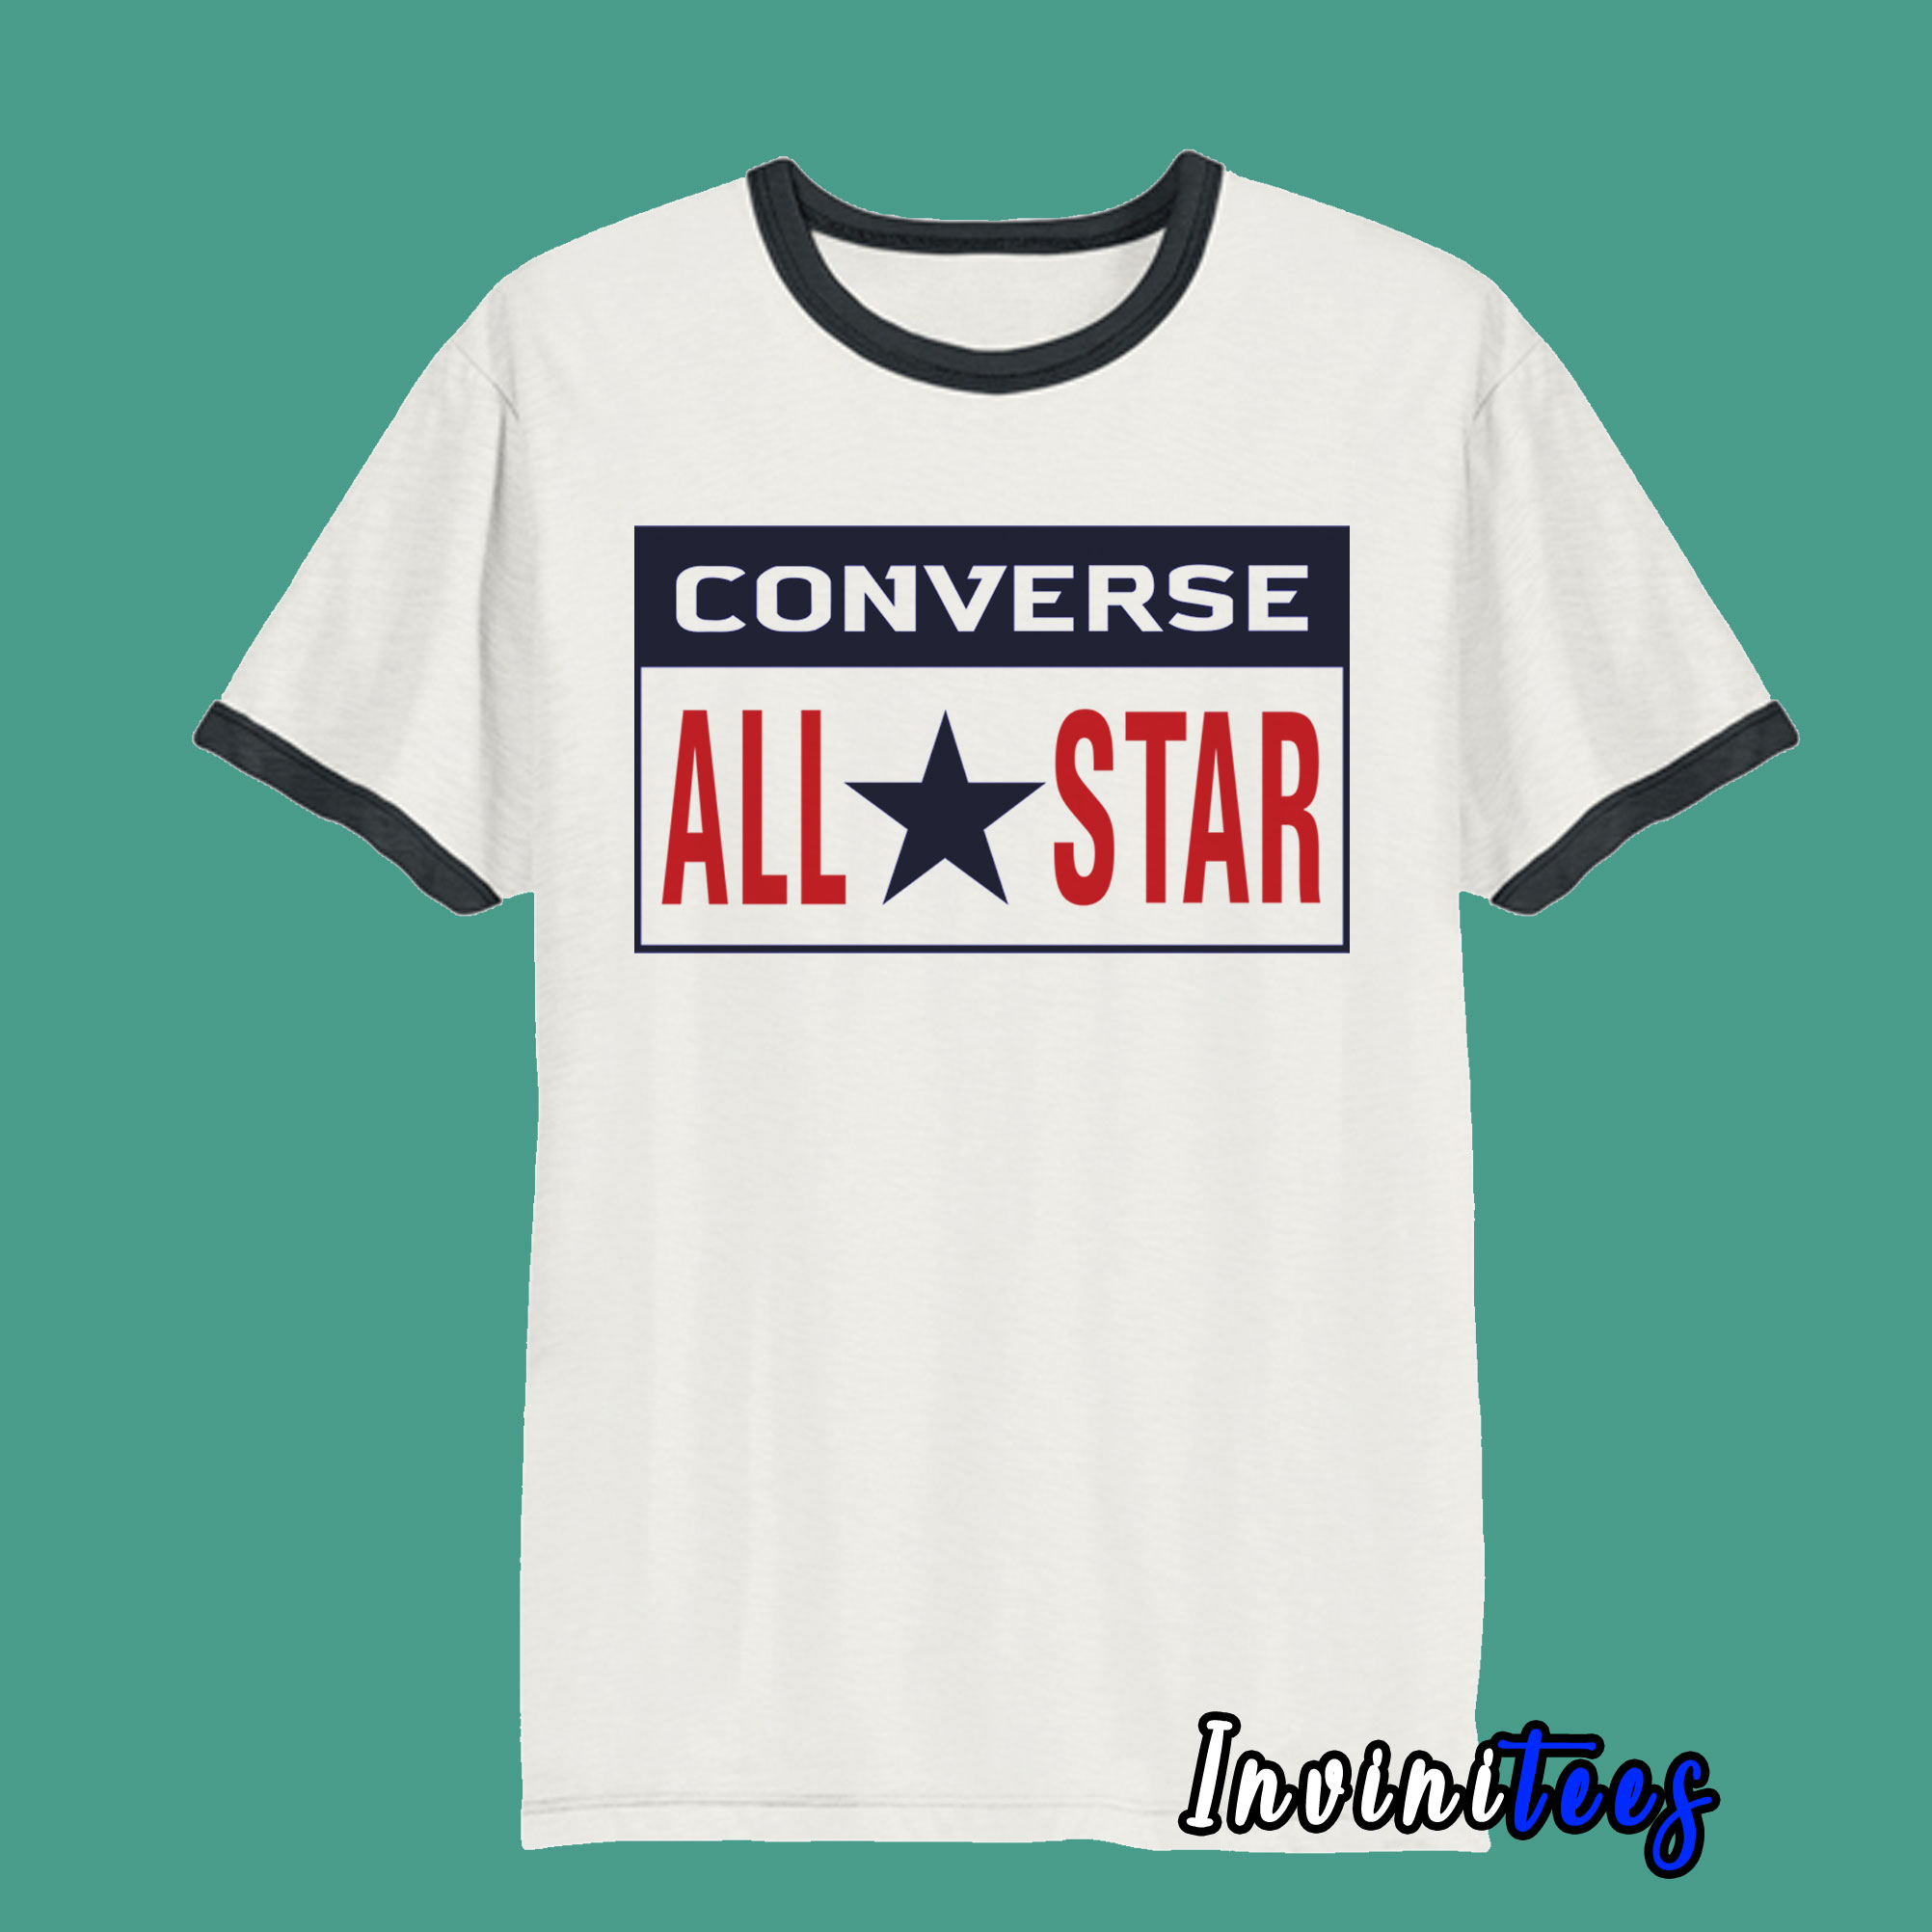 converse all star shirts